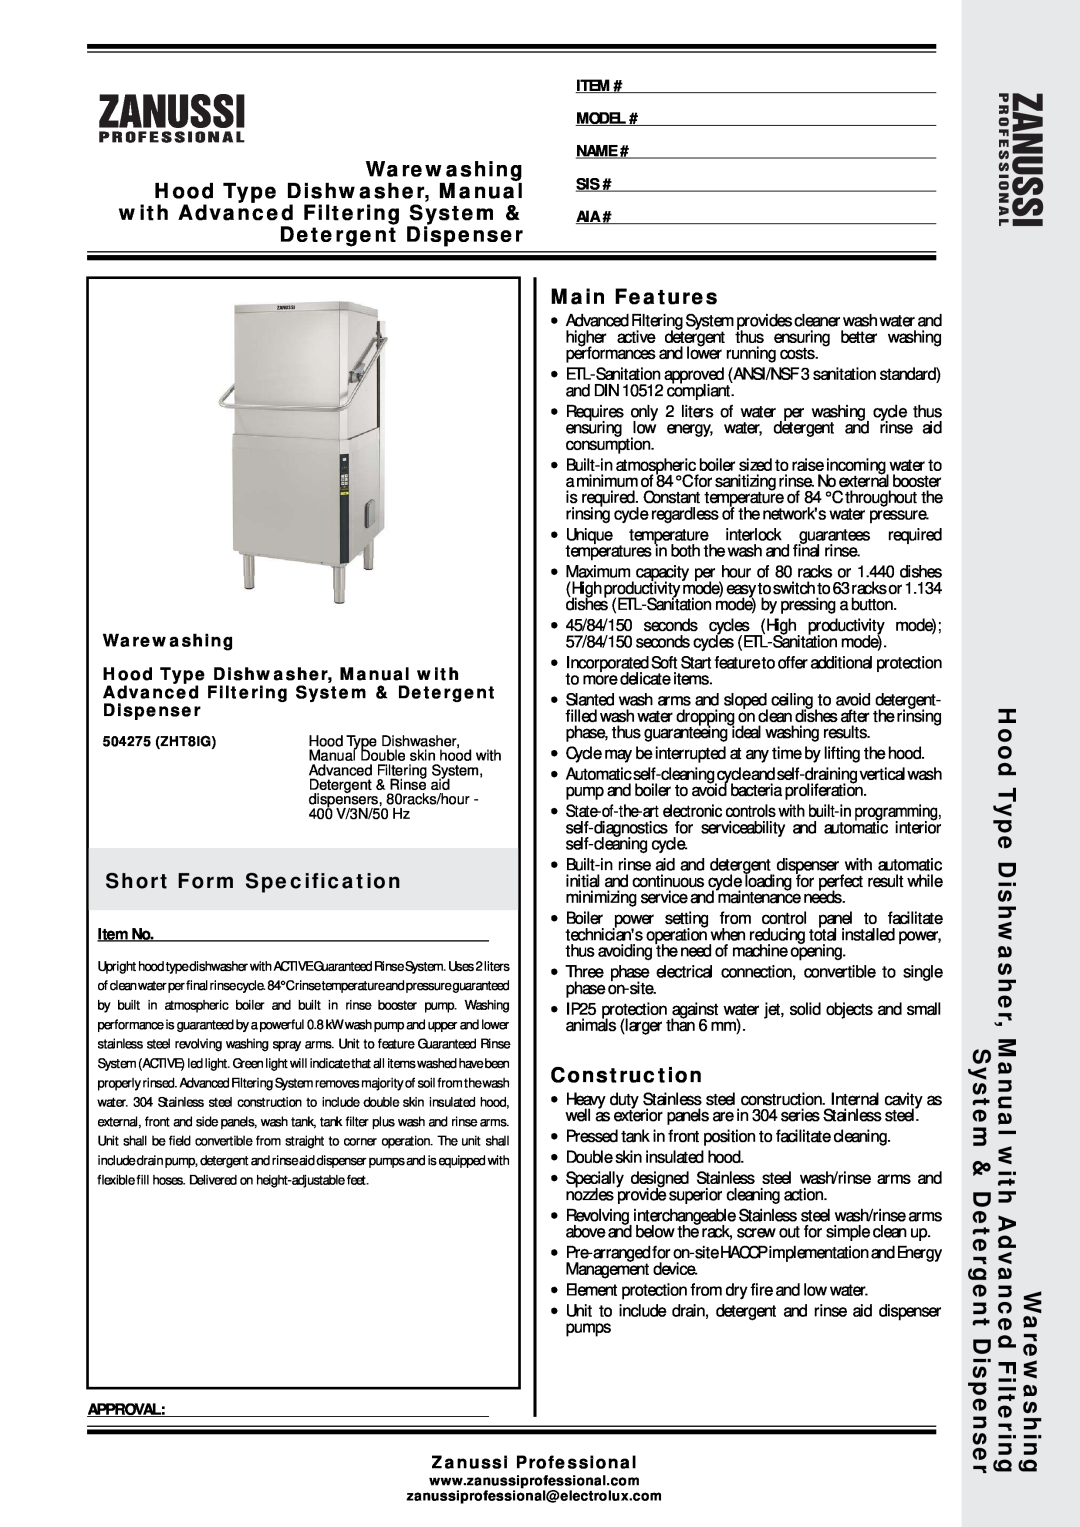 Electrolux ZHT8IG manual Warewashing, Hood Type Dishwasher, Manual, with Advanced Filtering System, Detergent Dispenser 